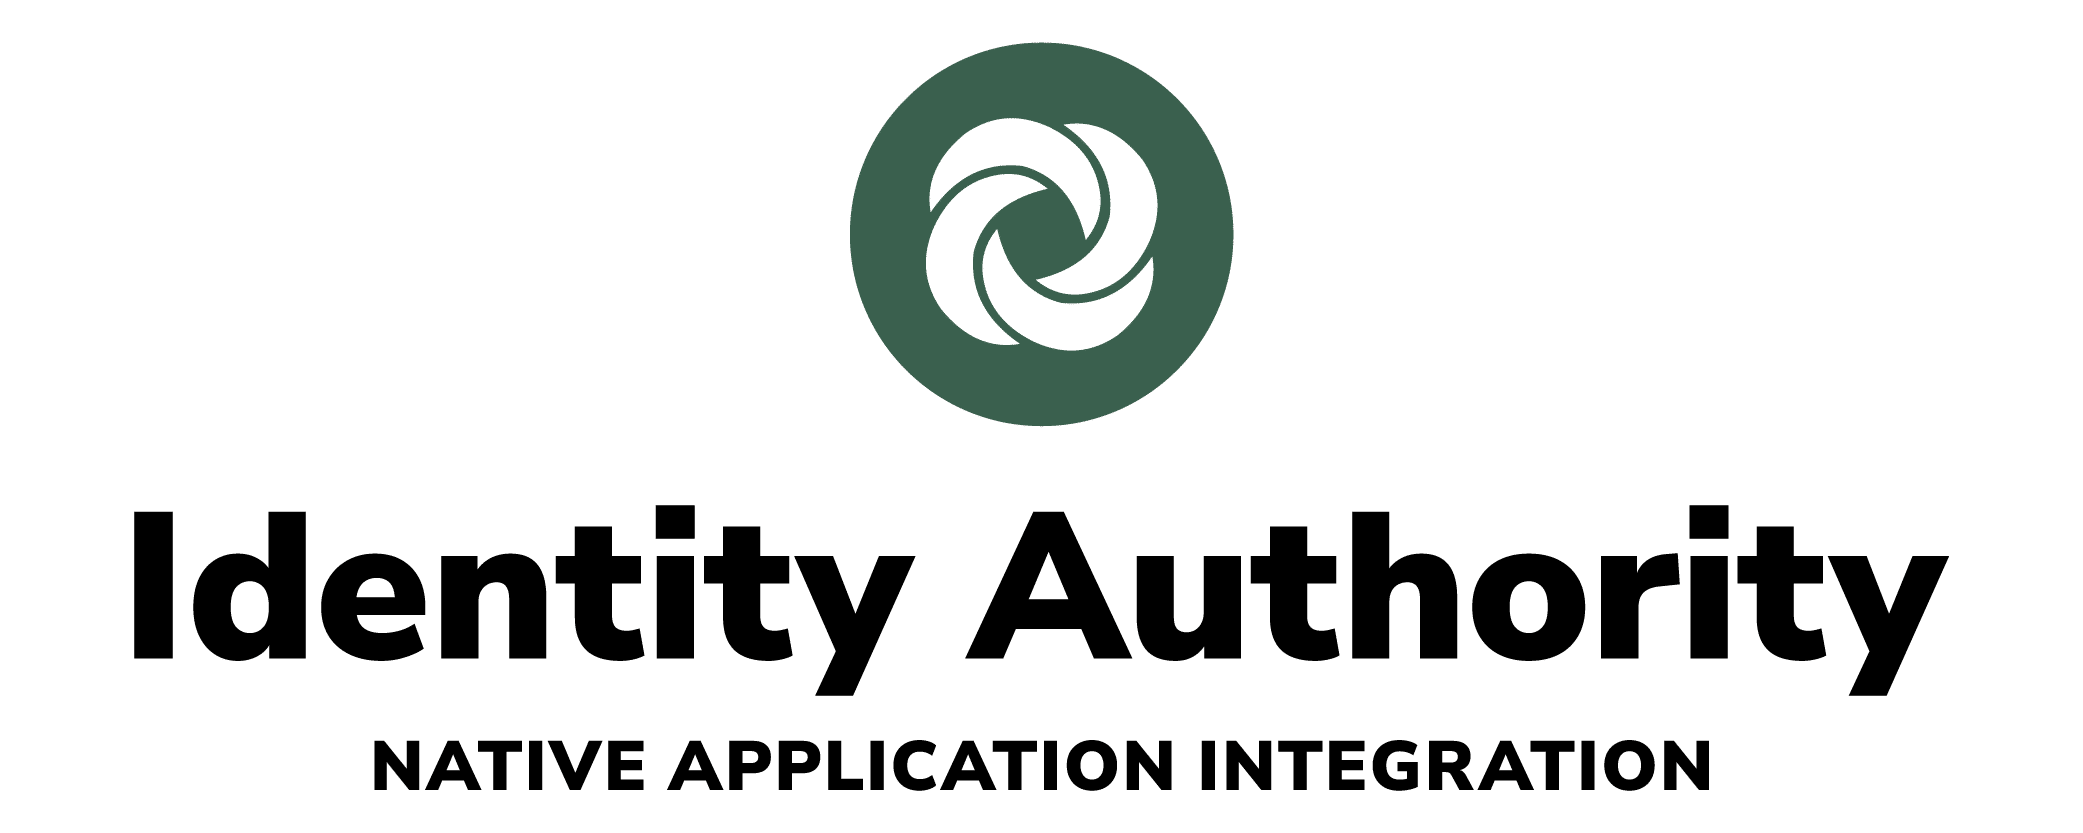 Identity Authority Native Application Integration